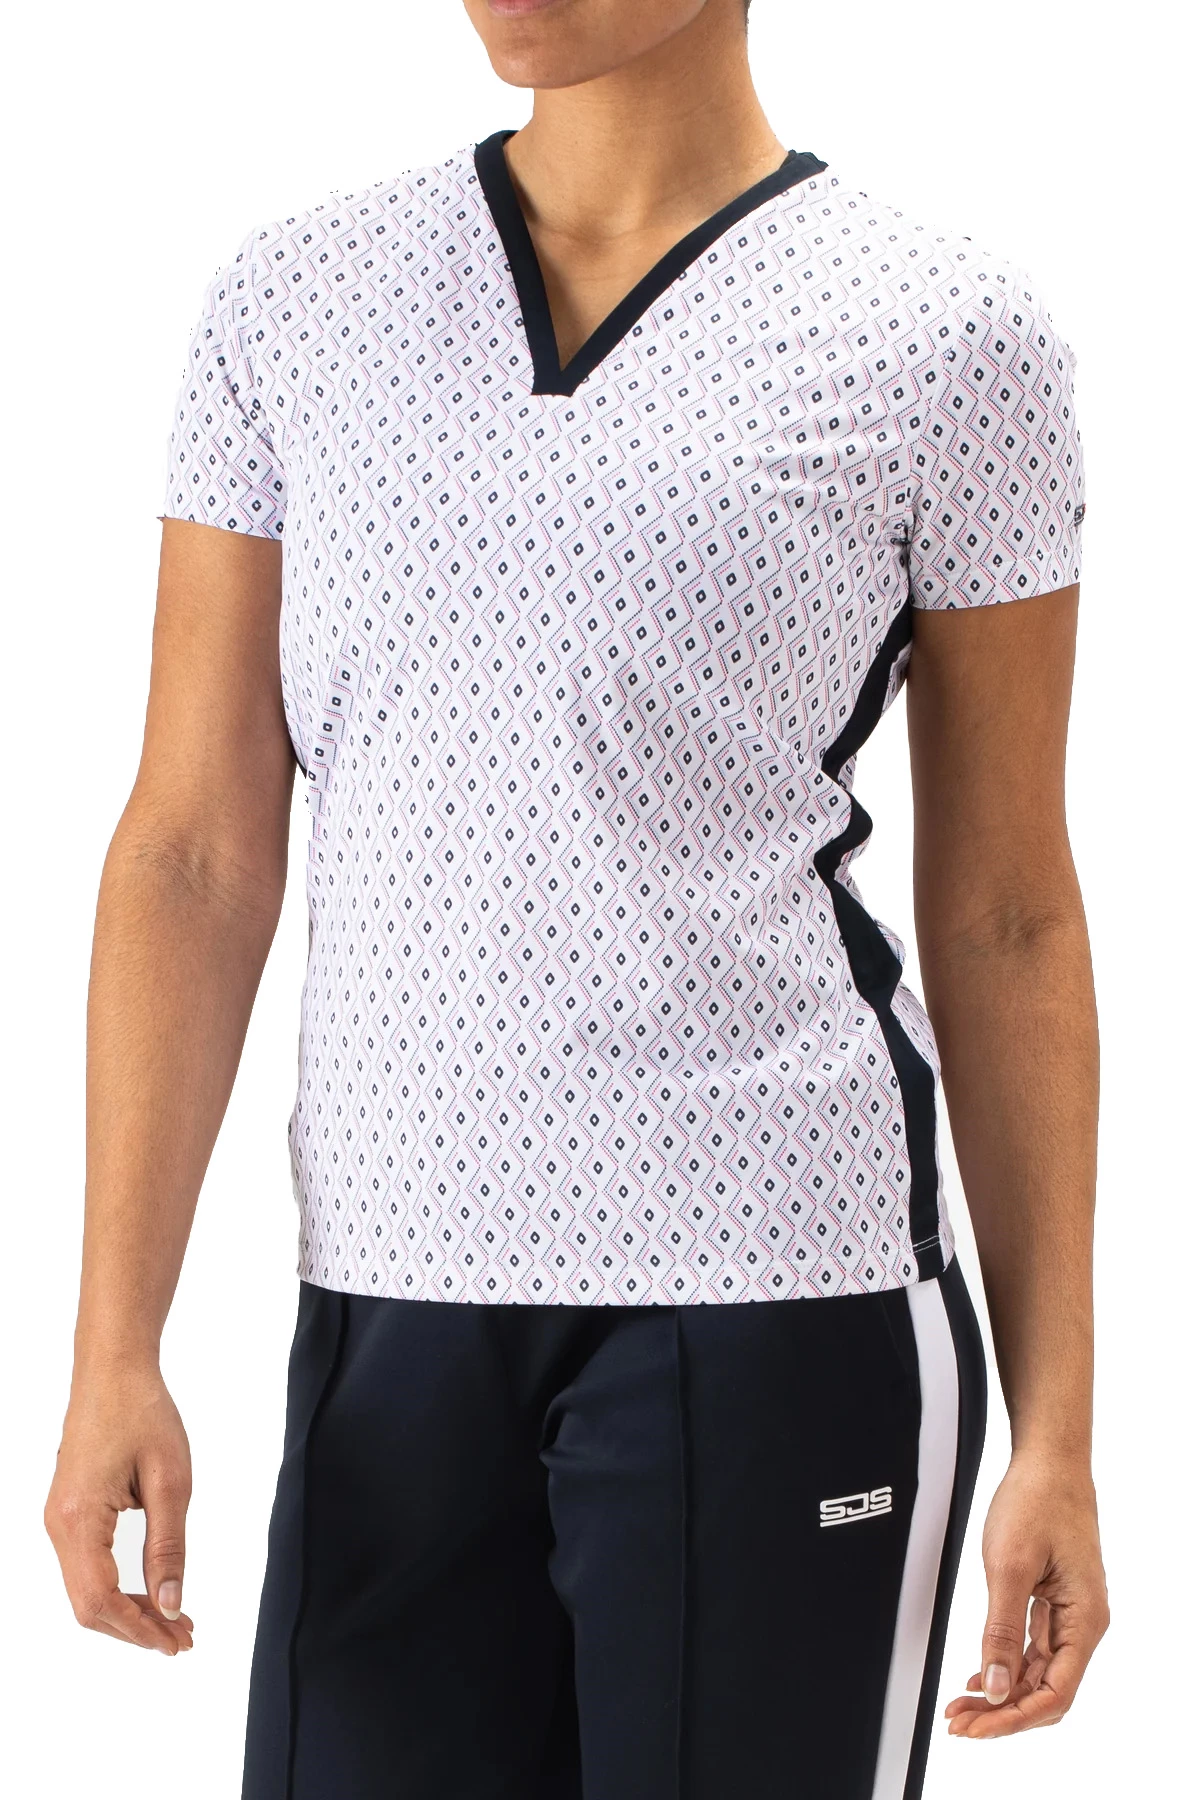 Sjeng Sports Irma tennis shirt dames